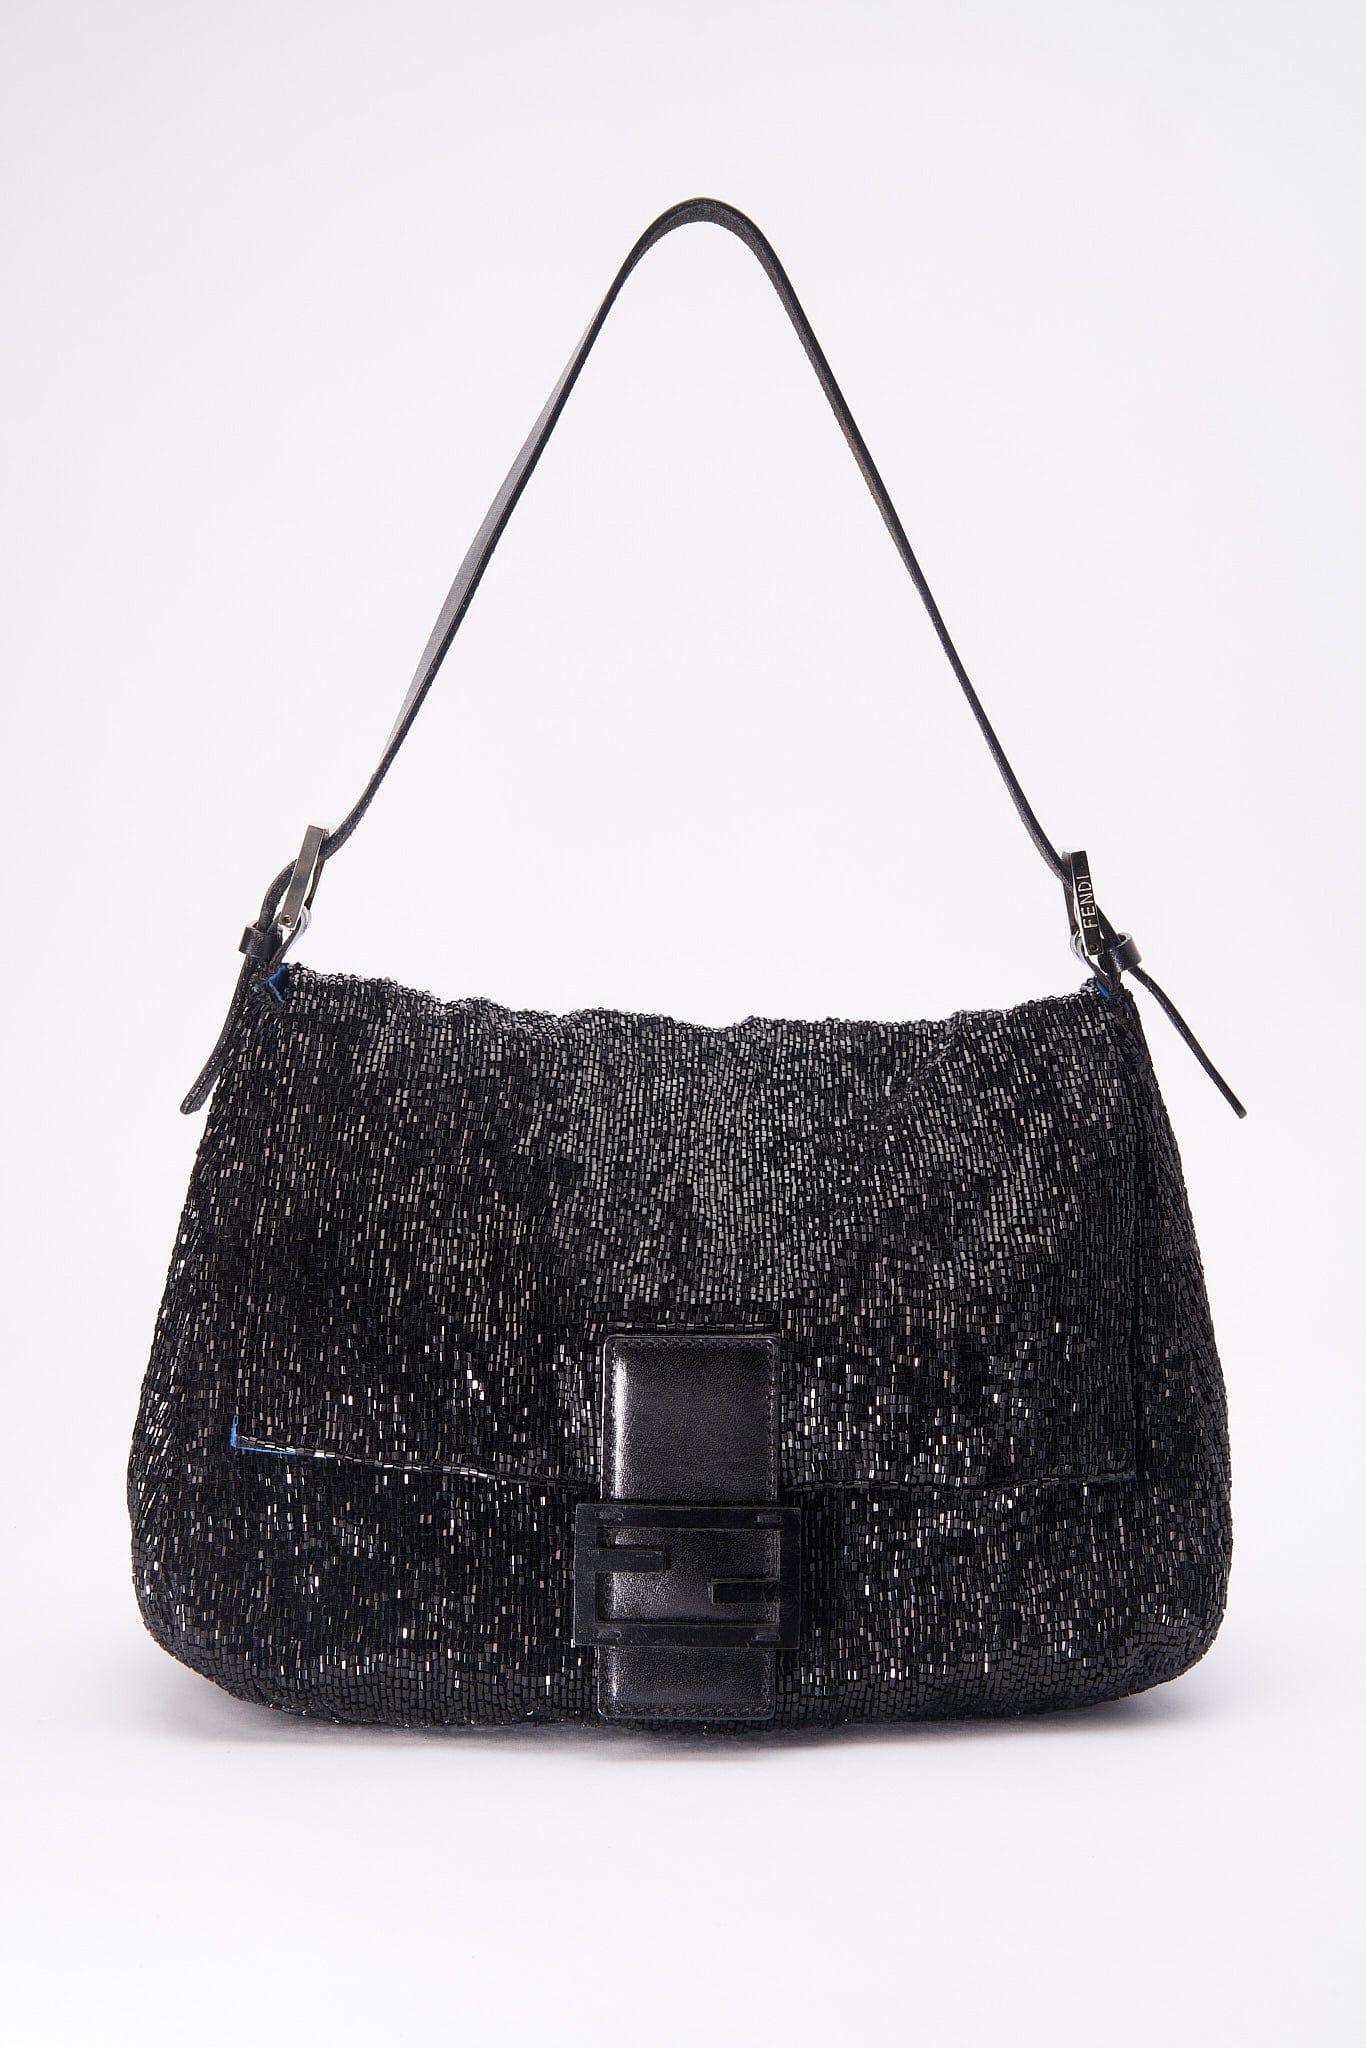 Fendi Black Sequin Beaded Mamma Baguette Bag Blue lining